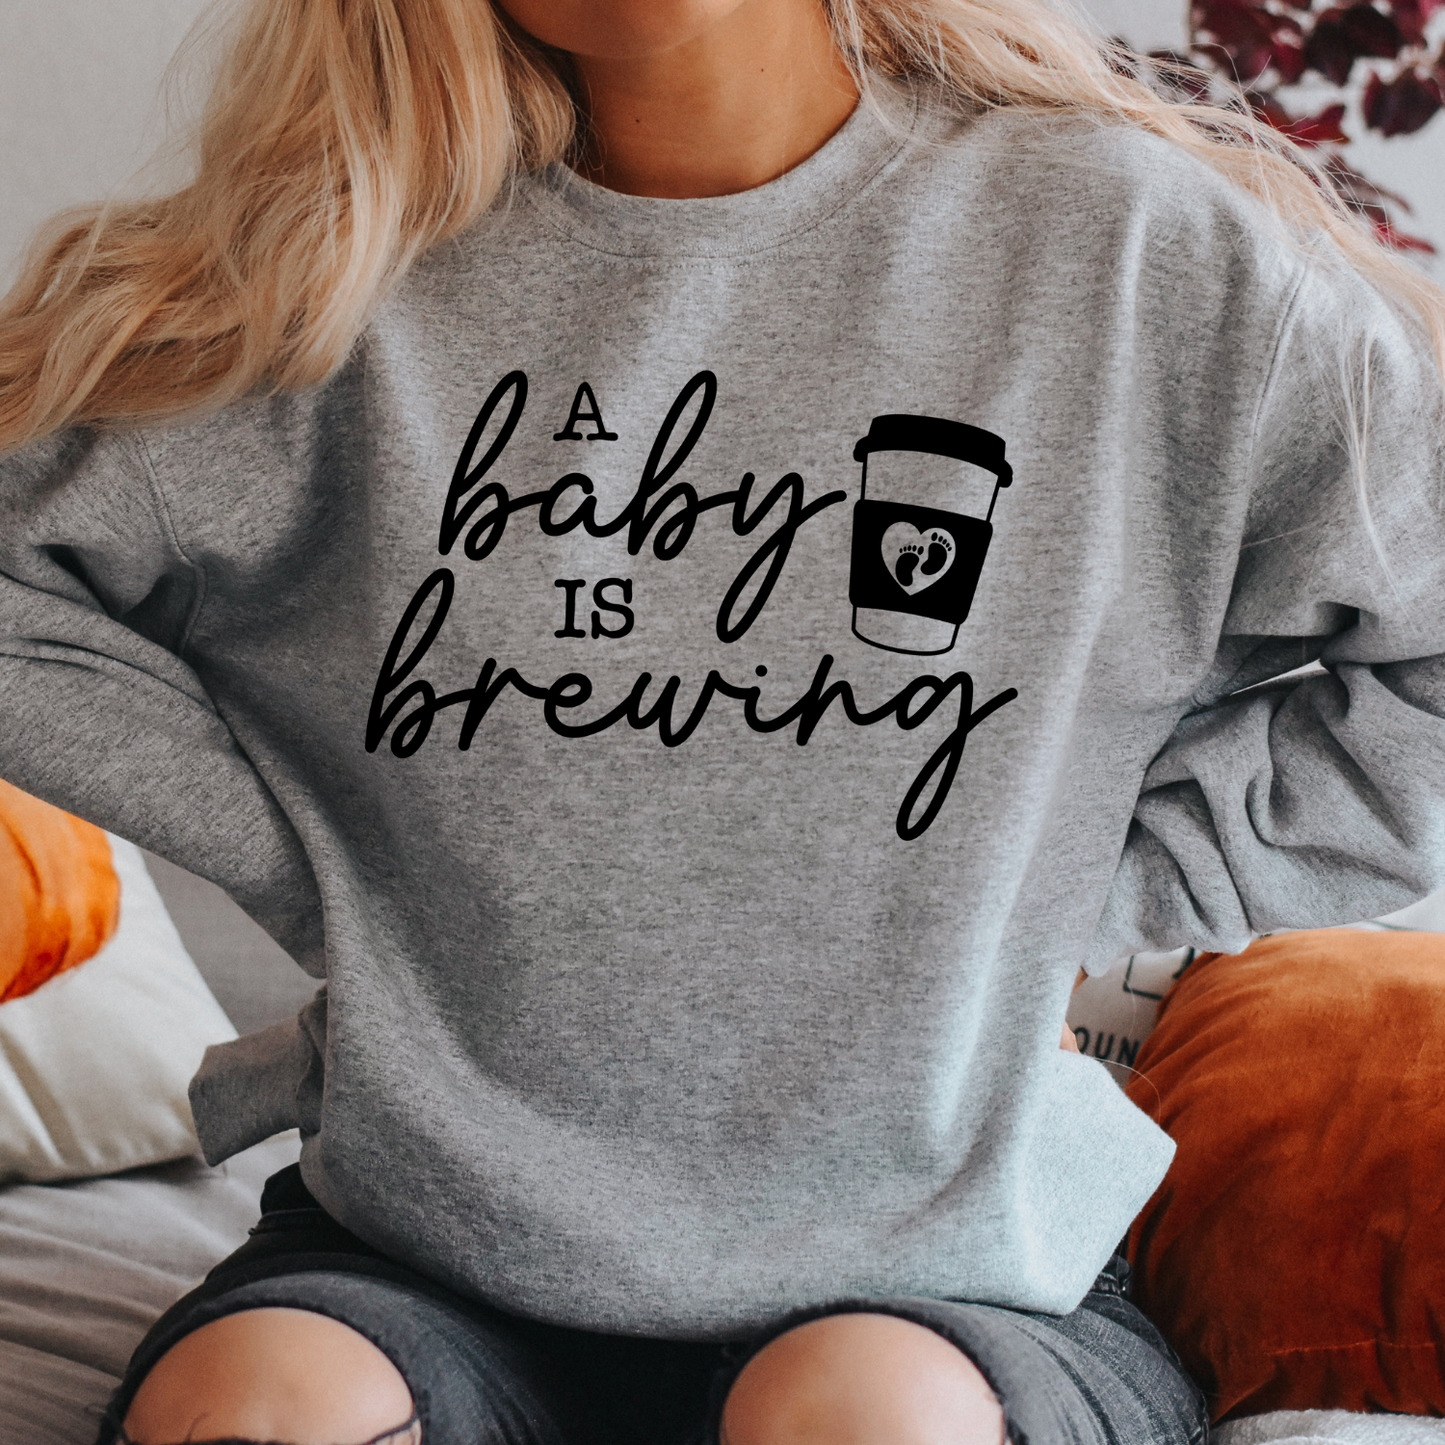 A Baby is Brewing Sweatshirt